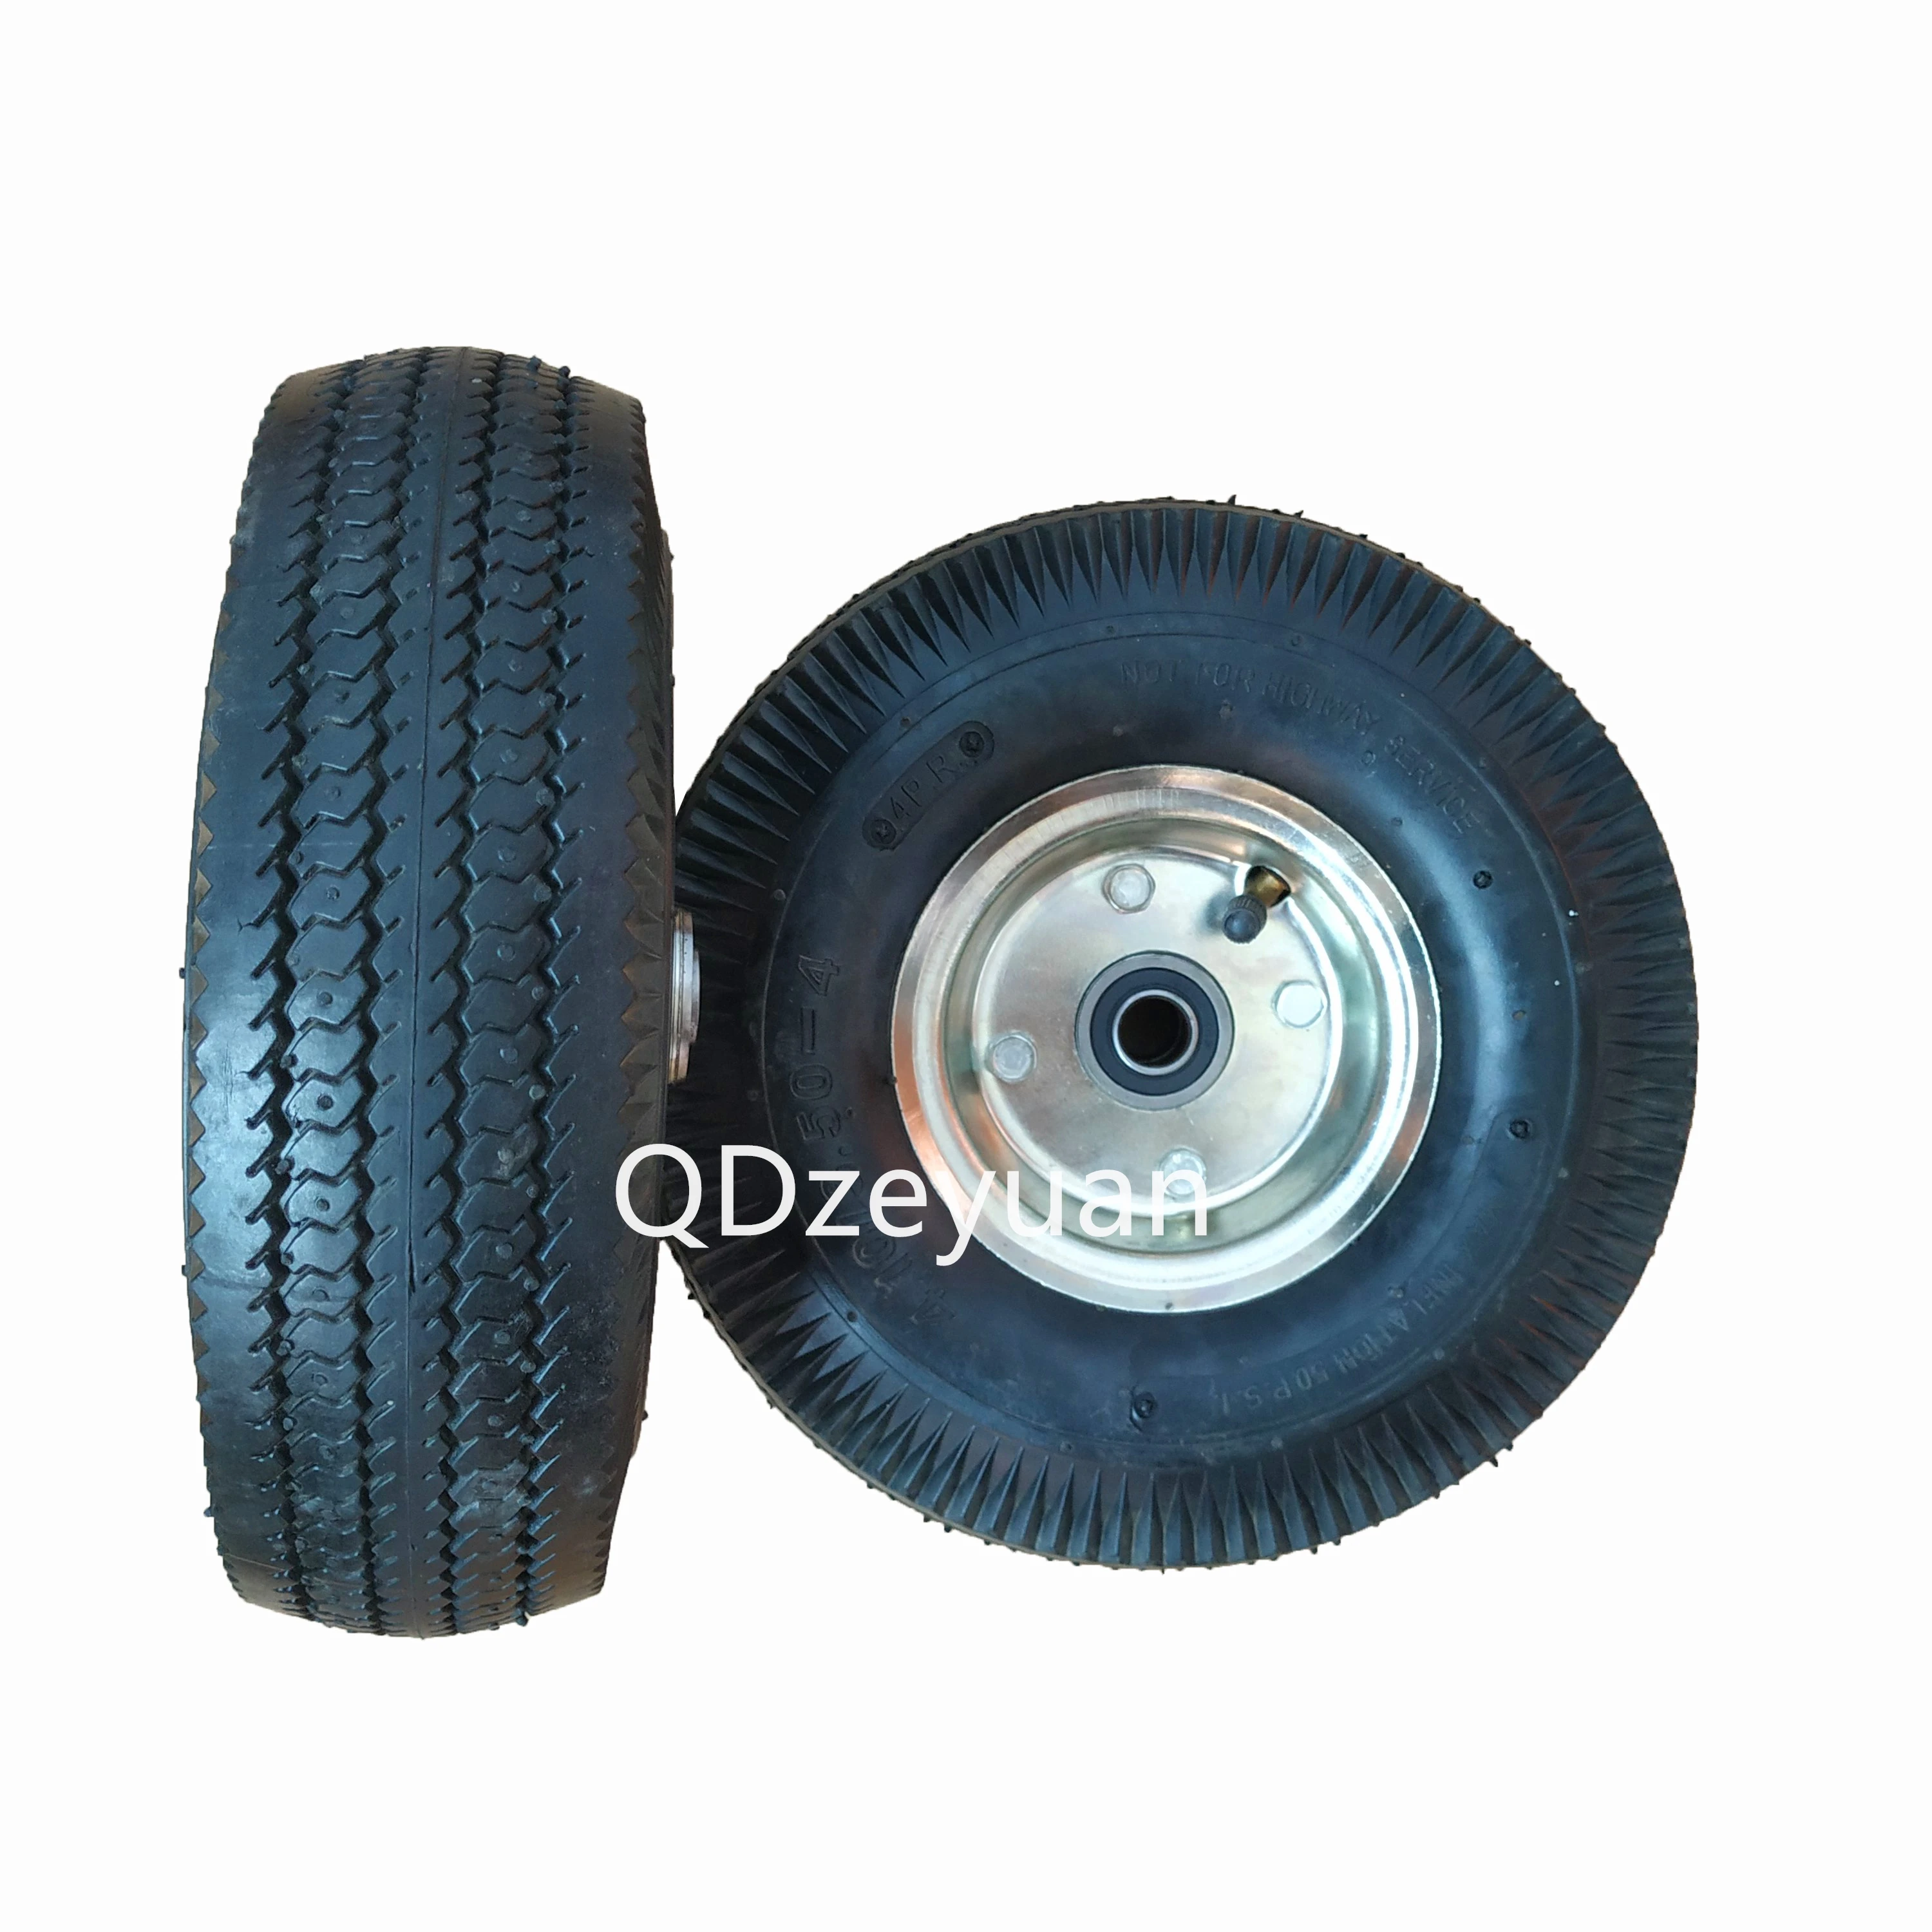 Tyres Go cart 2 x RED Heavy Duty Pneumatic Sack Truck Trolley Wheel RM019 